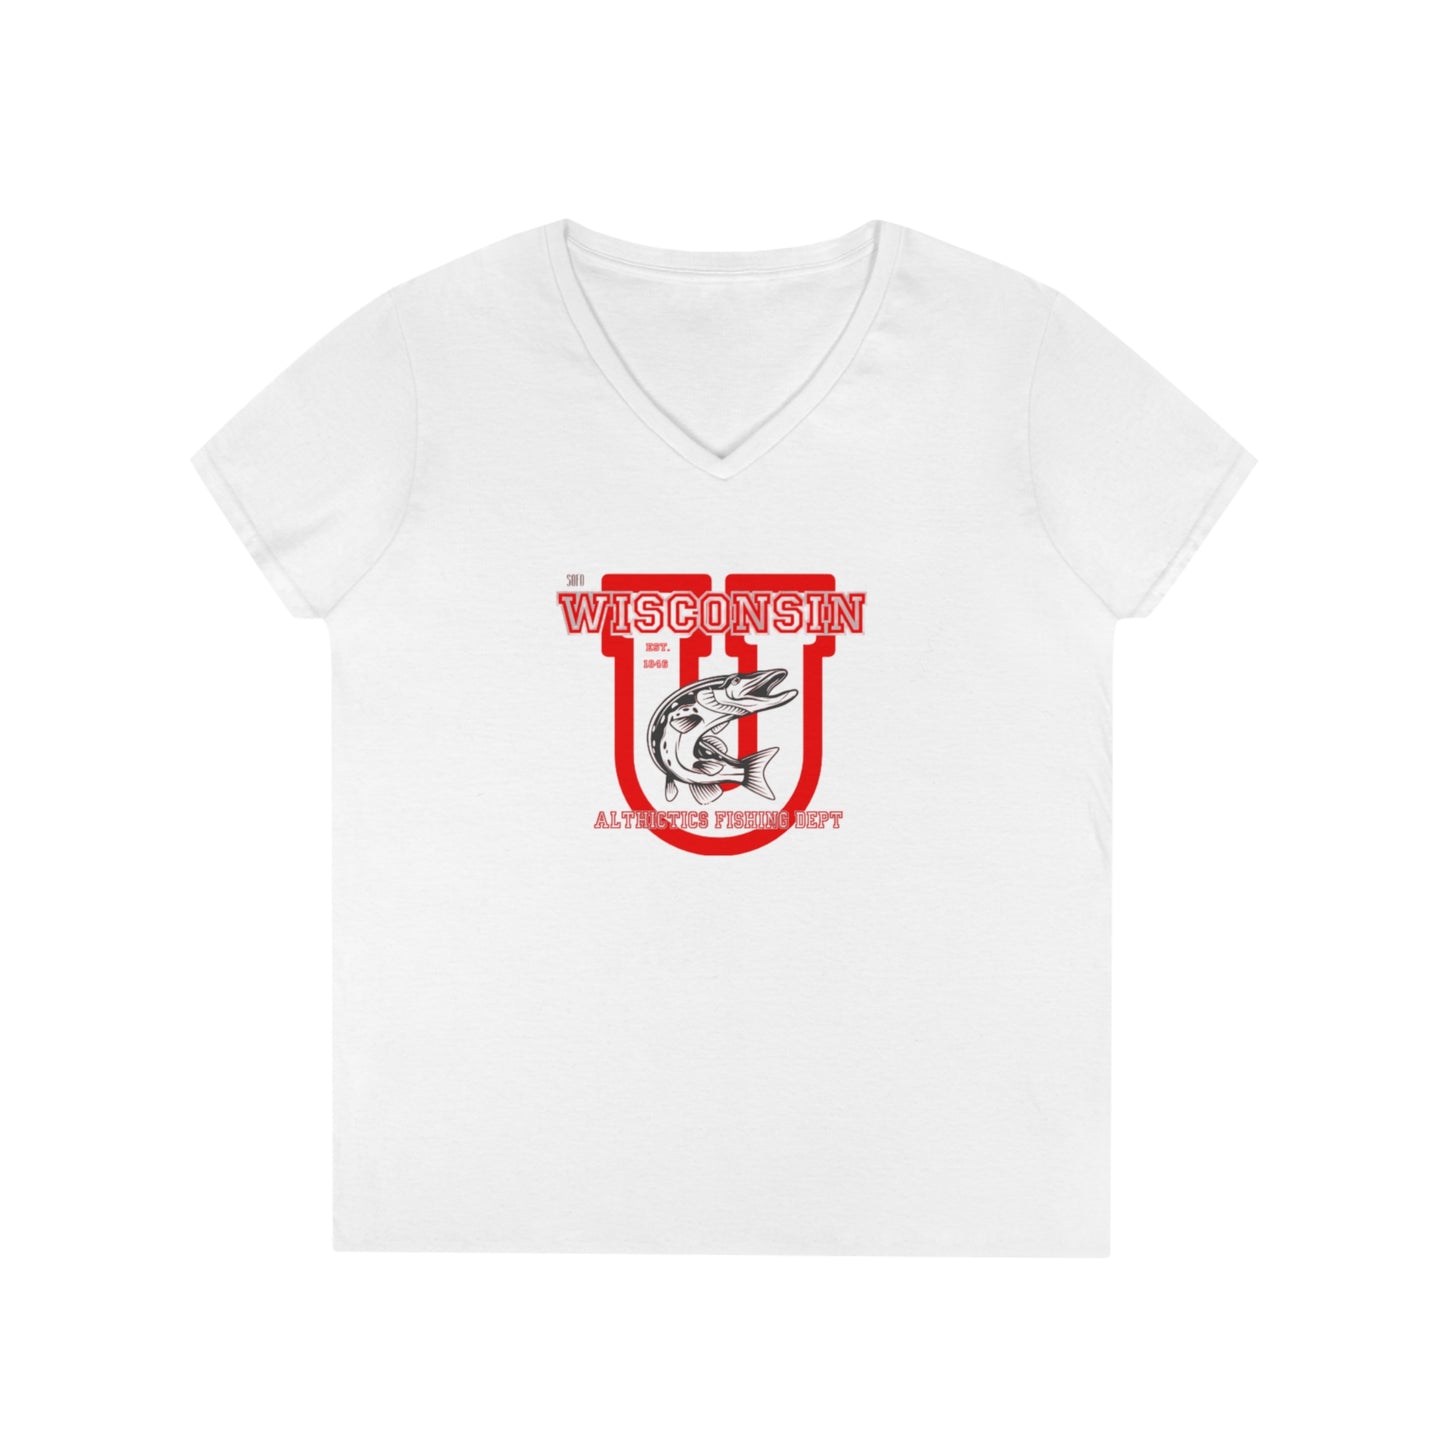 Wisconsin Musky's The Big U  (Ladies)' V-Neck T-Shirt